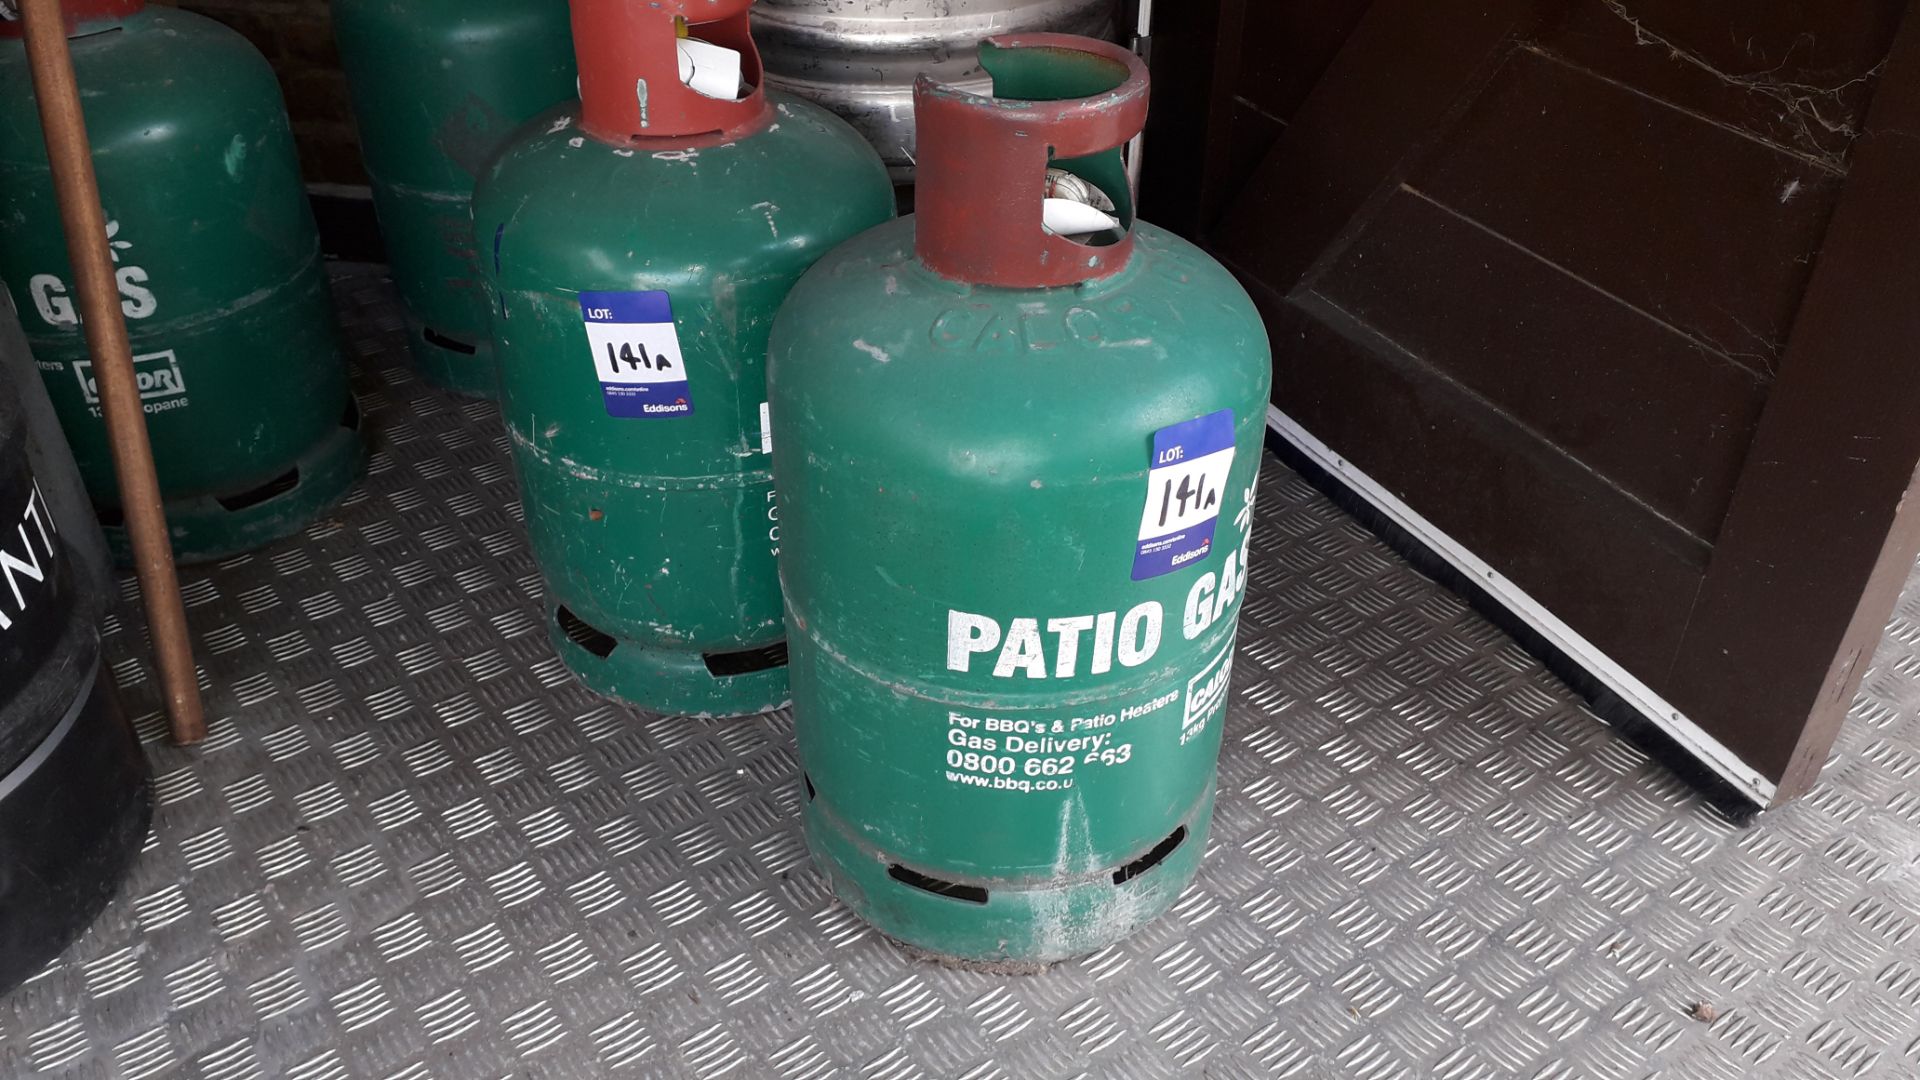 Two Calor 13kg Patio Gas (Bottles Property of Calo